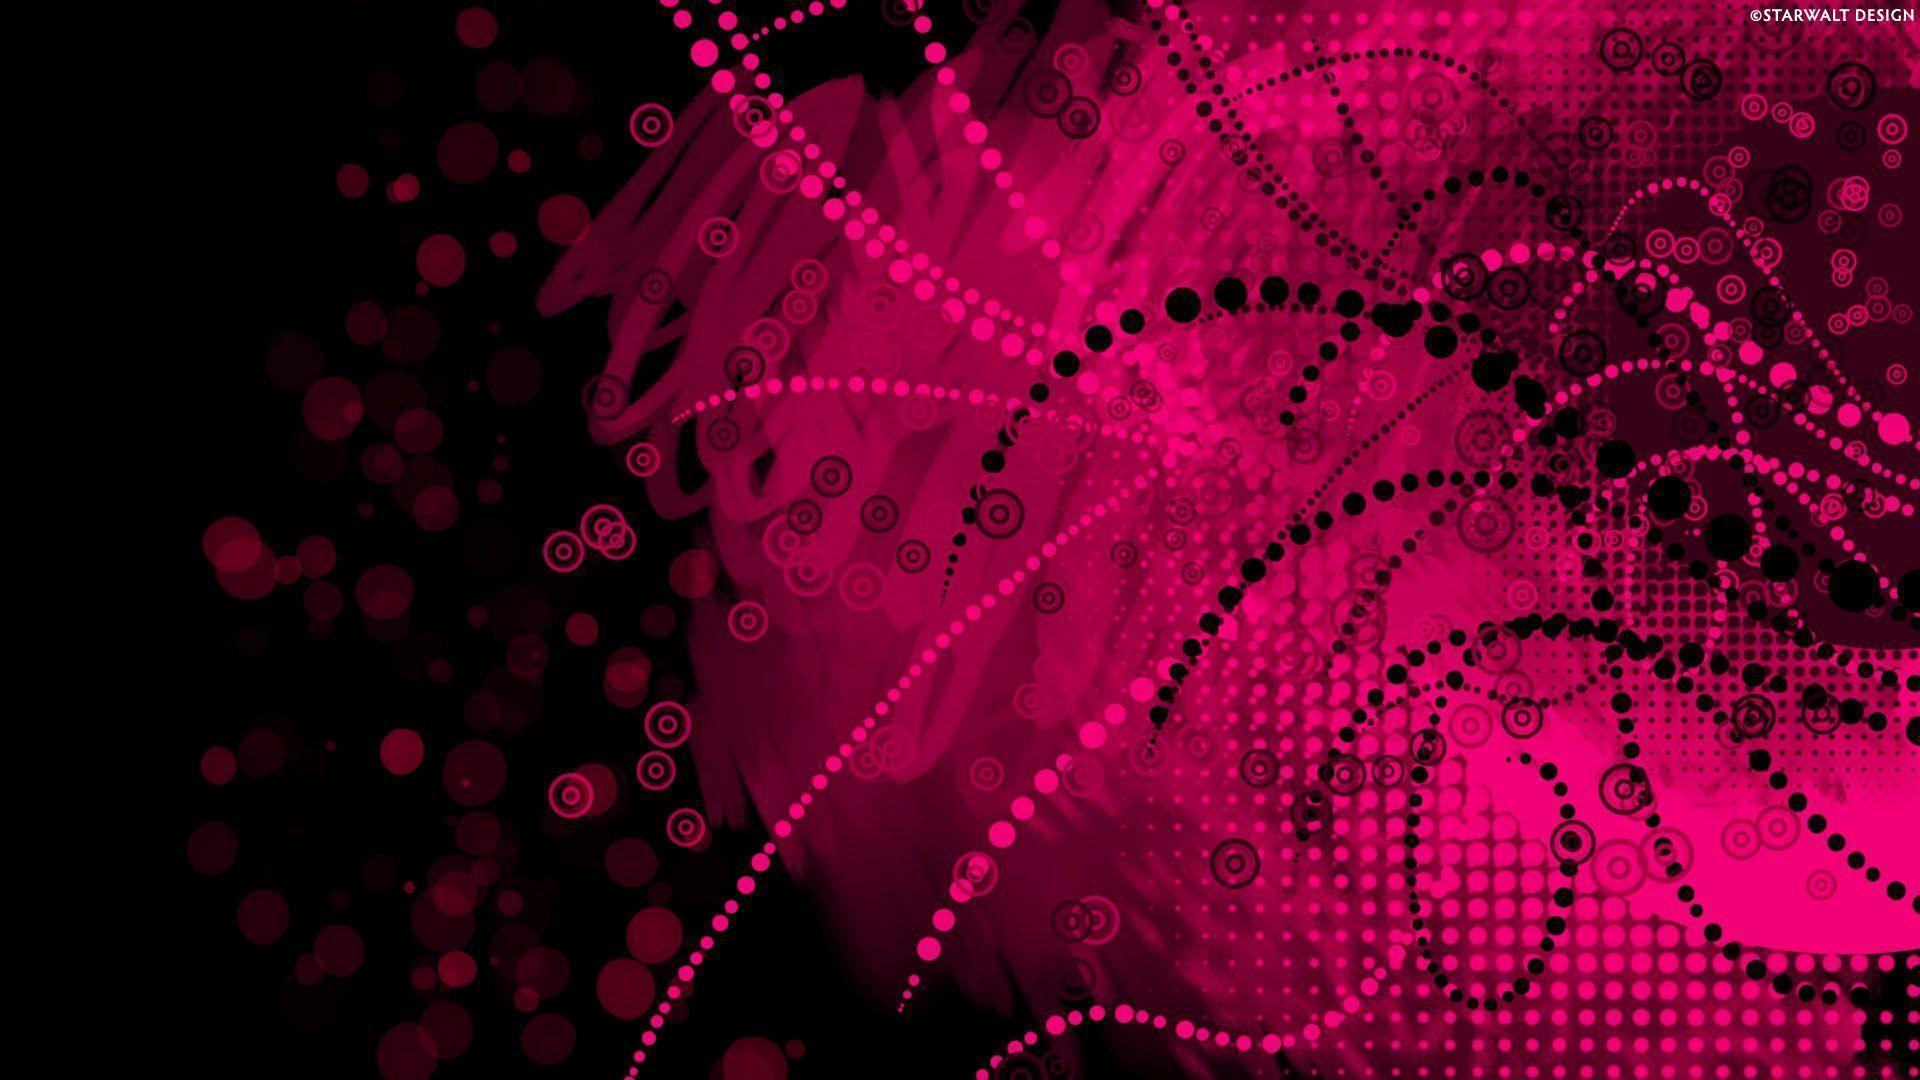 Pink And Black Wallpaper Full Free Wallpaper. awshdwallpaper